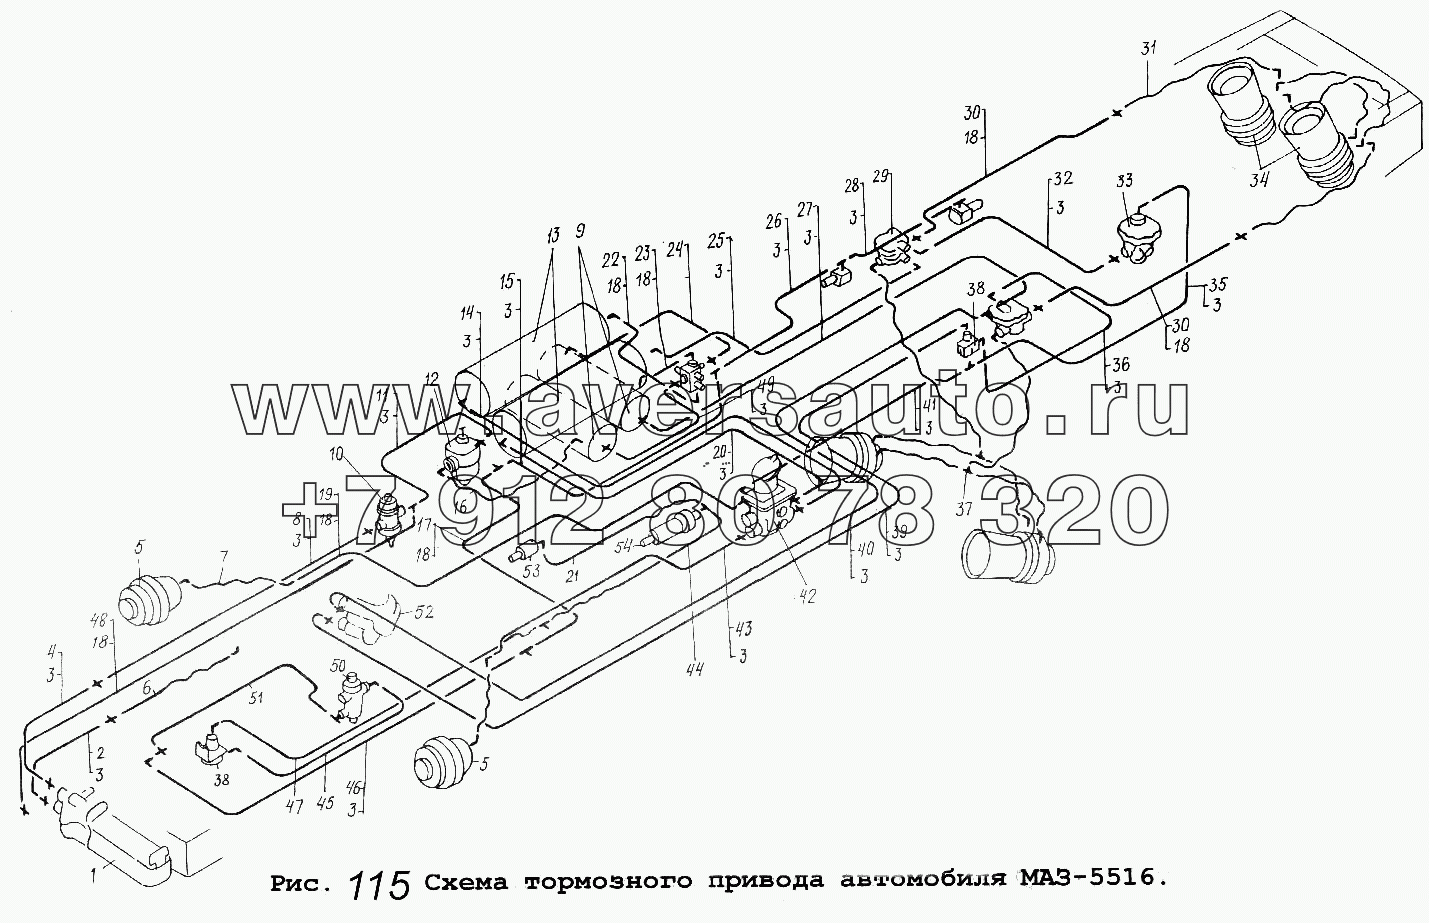 Схема тормозного привода автомобиля МАЗ-5516